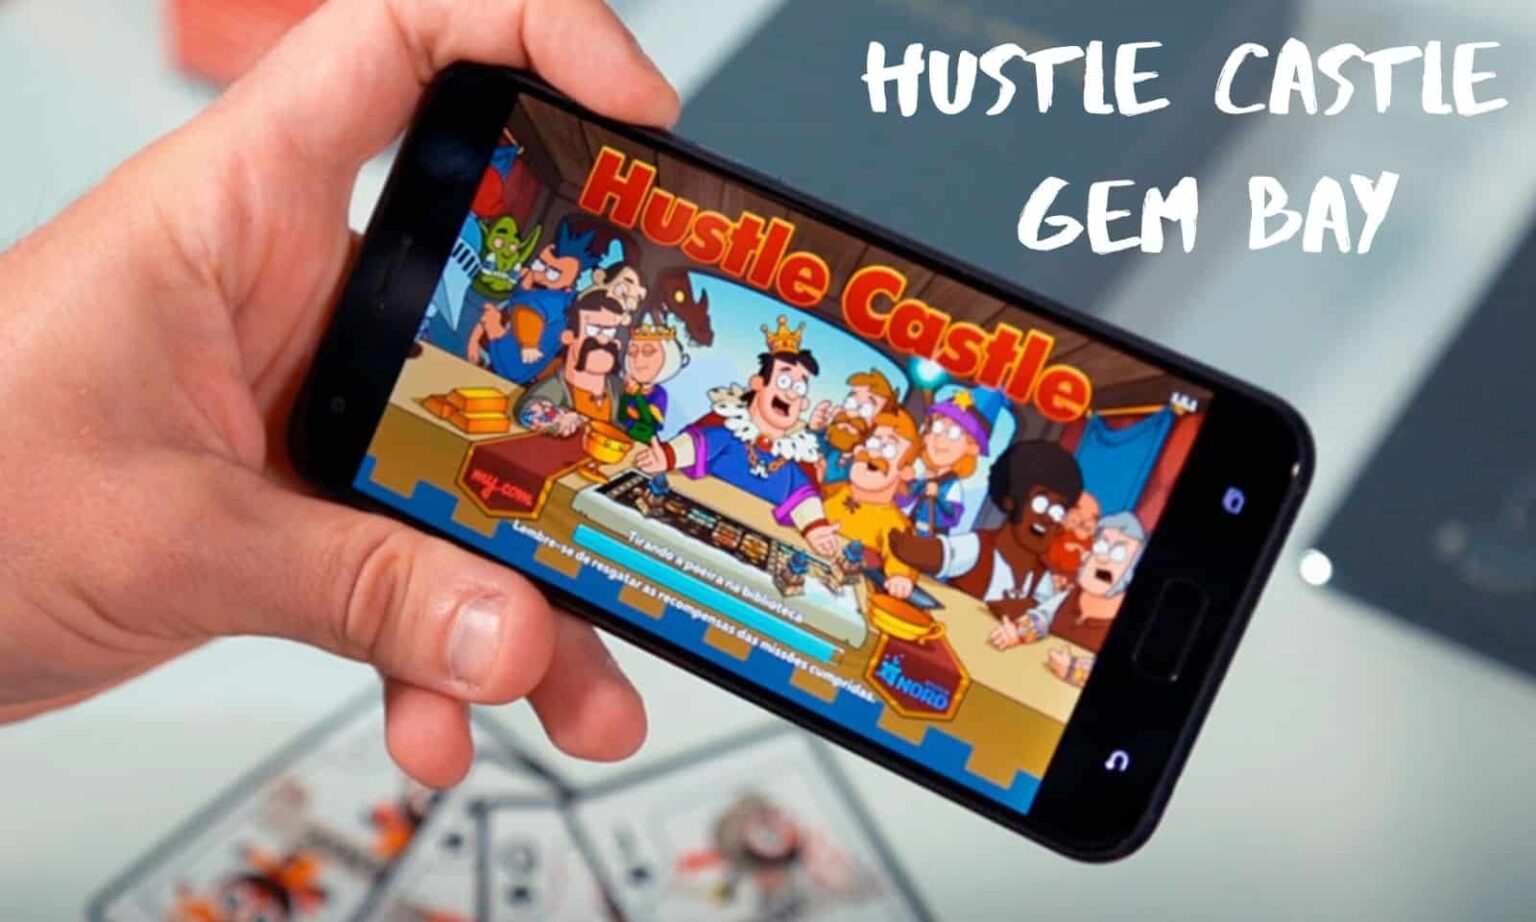 Hustle Castle Gem Bay Cover Image (Image Source: ASUS Fanaticos)